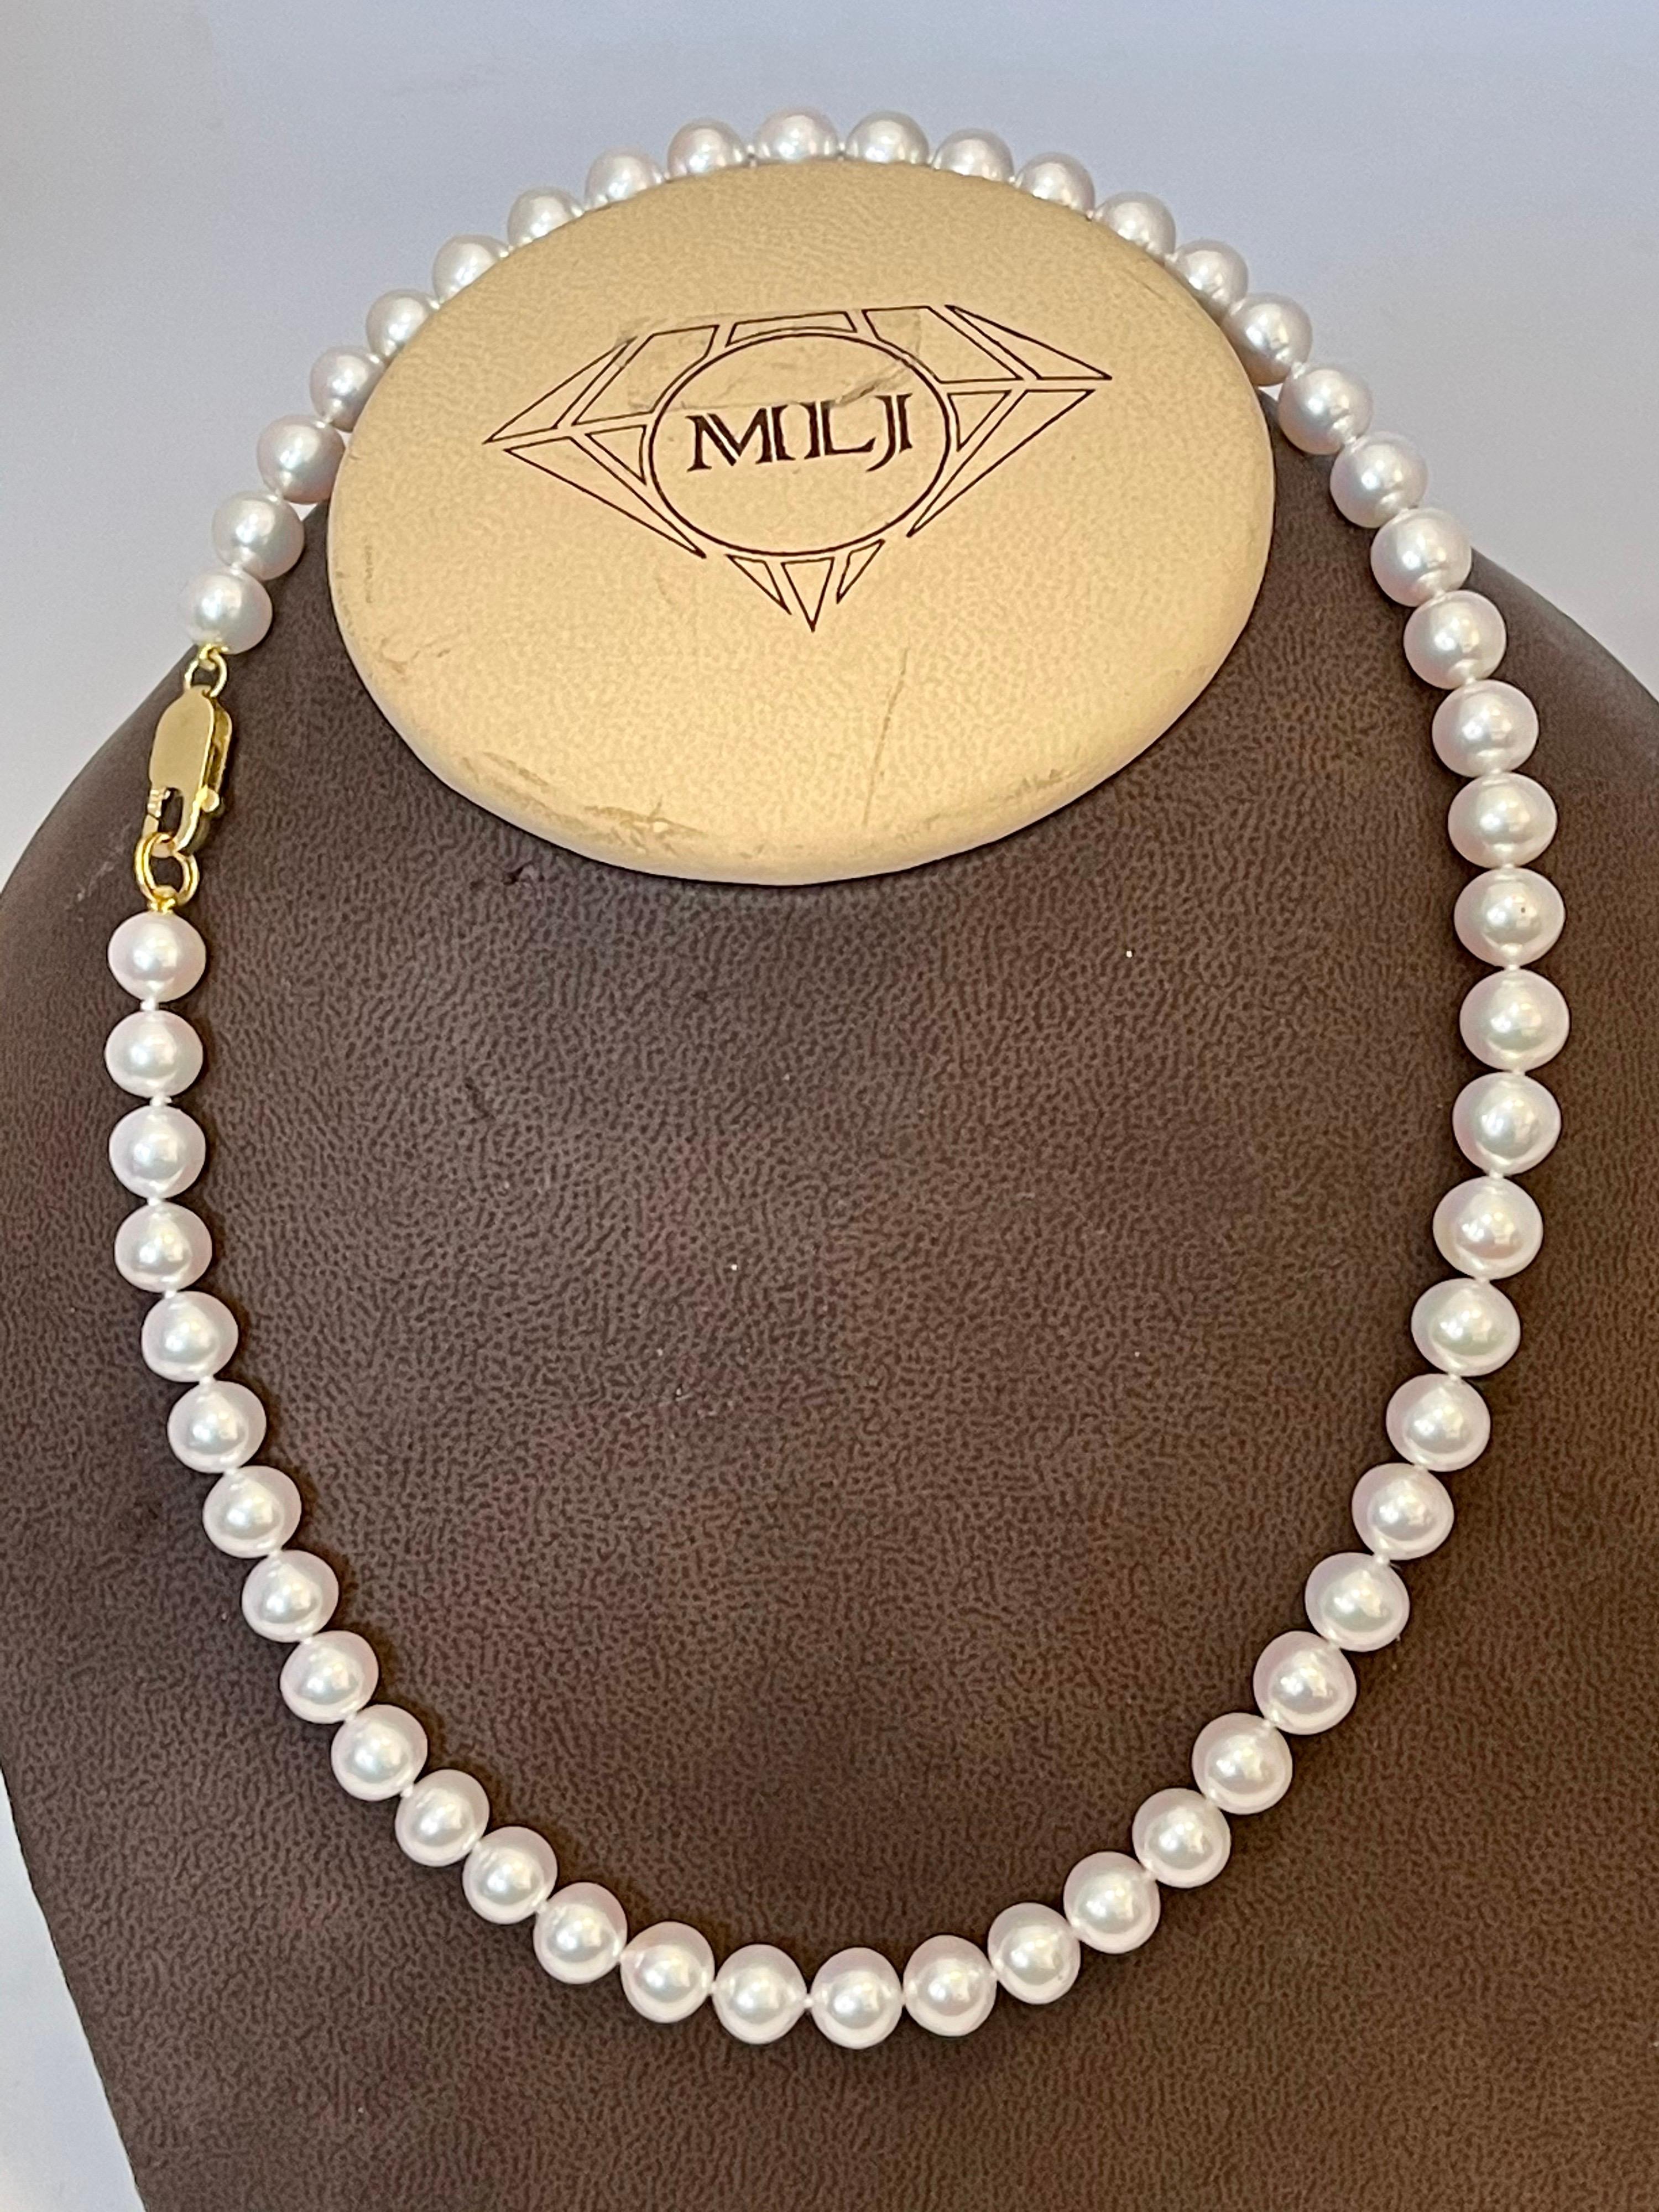 50 Round Akoya Pearls Strand Necklace Set in 14 Karat Gold Clasp 8